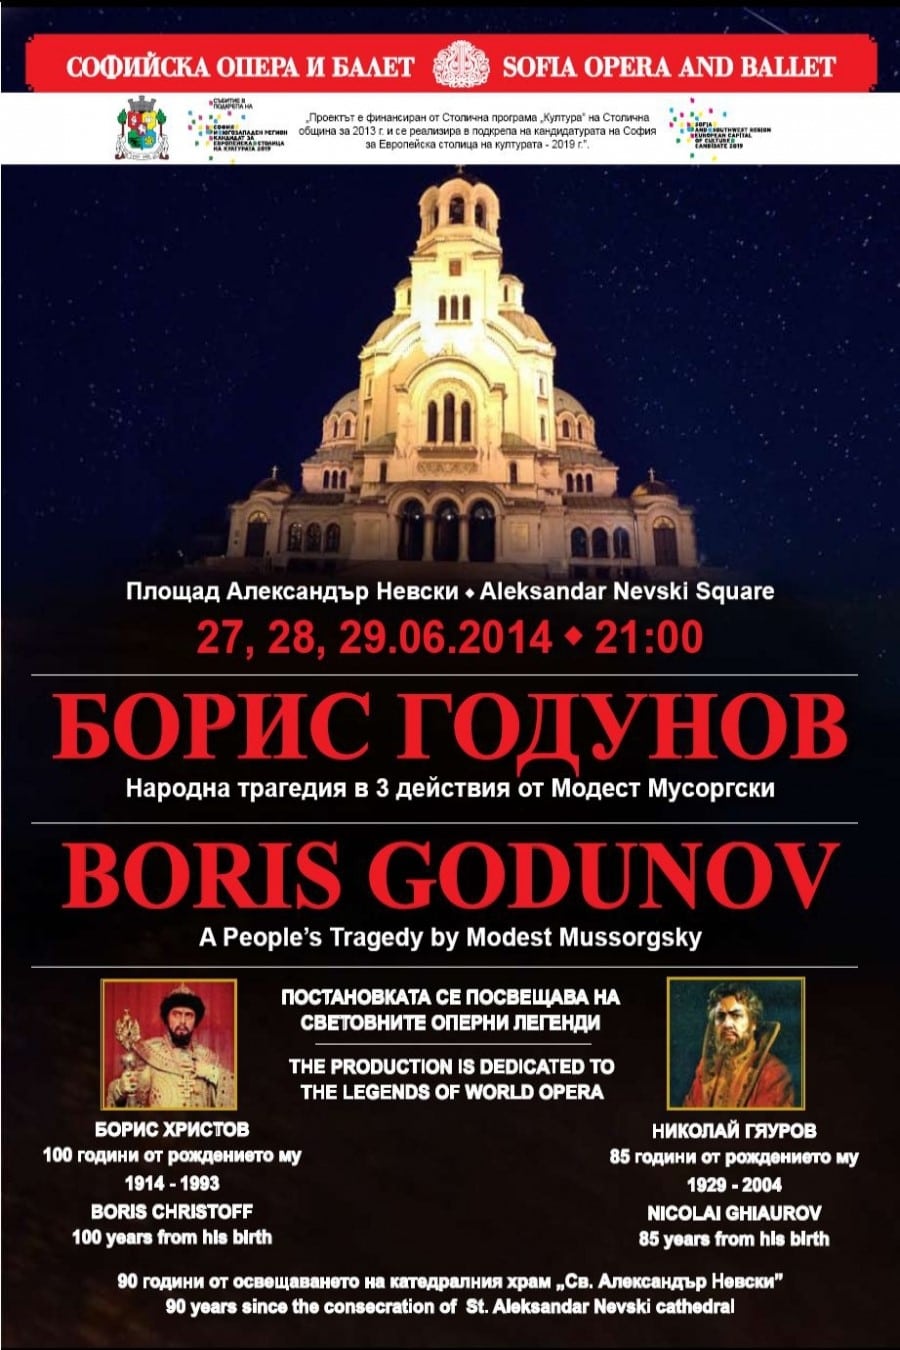 Boris Godunov - SOFIA OPERA AND BALLET